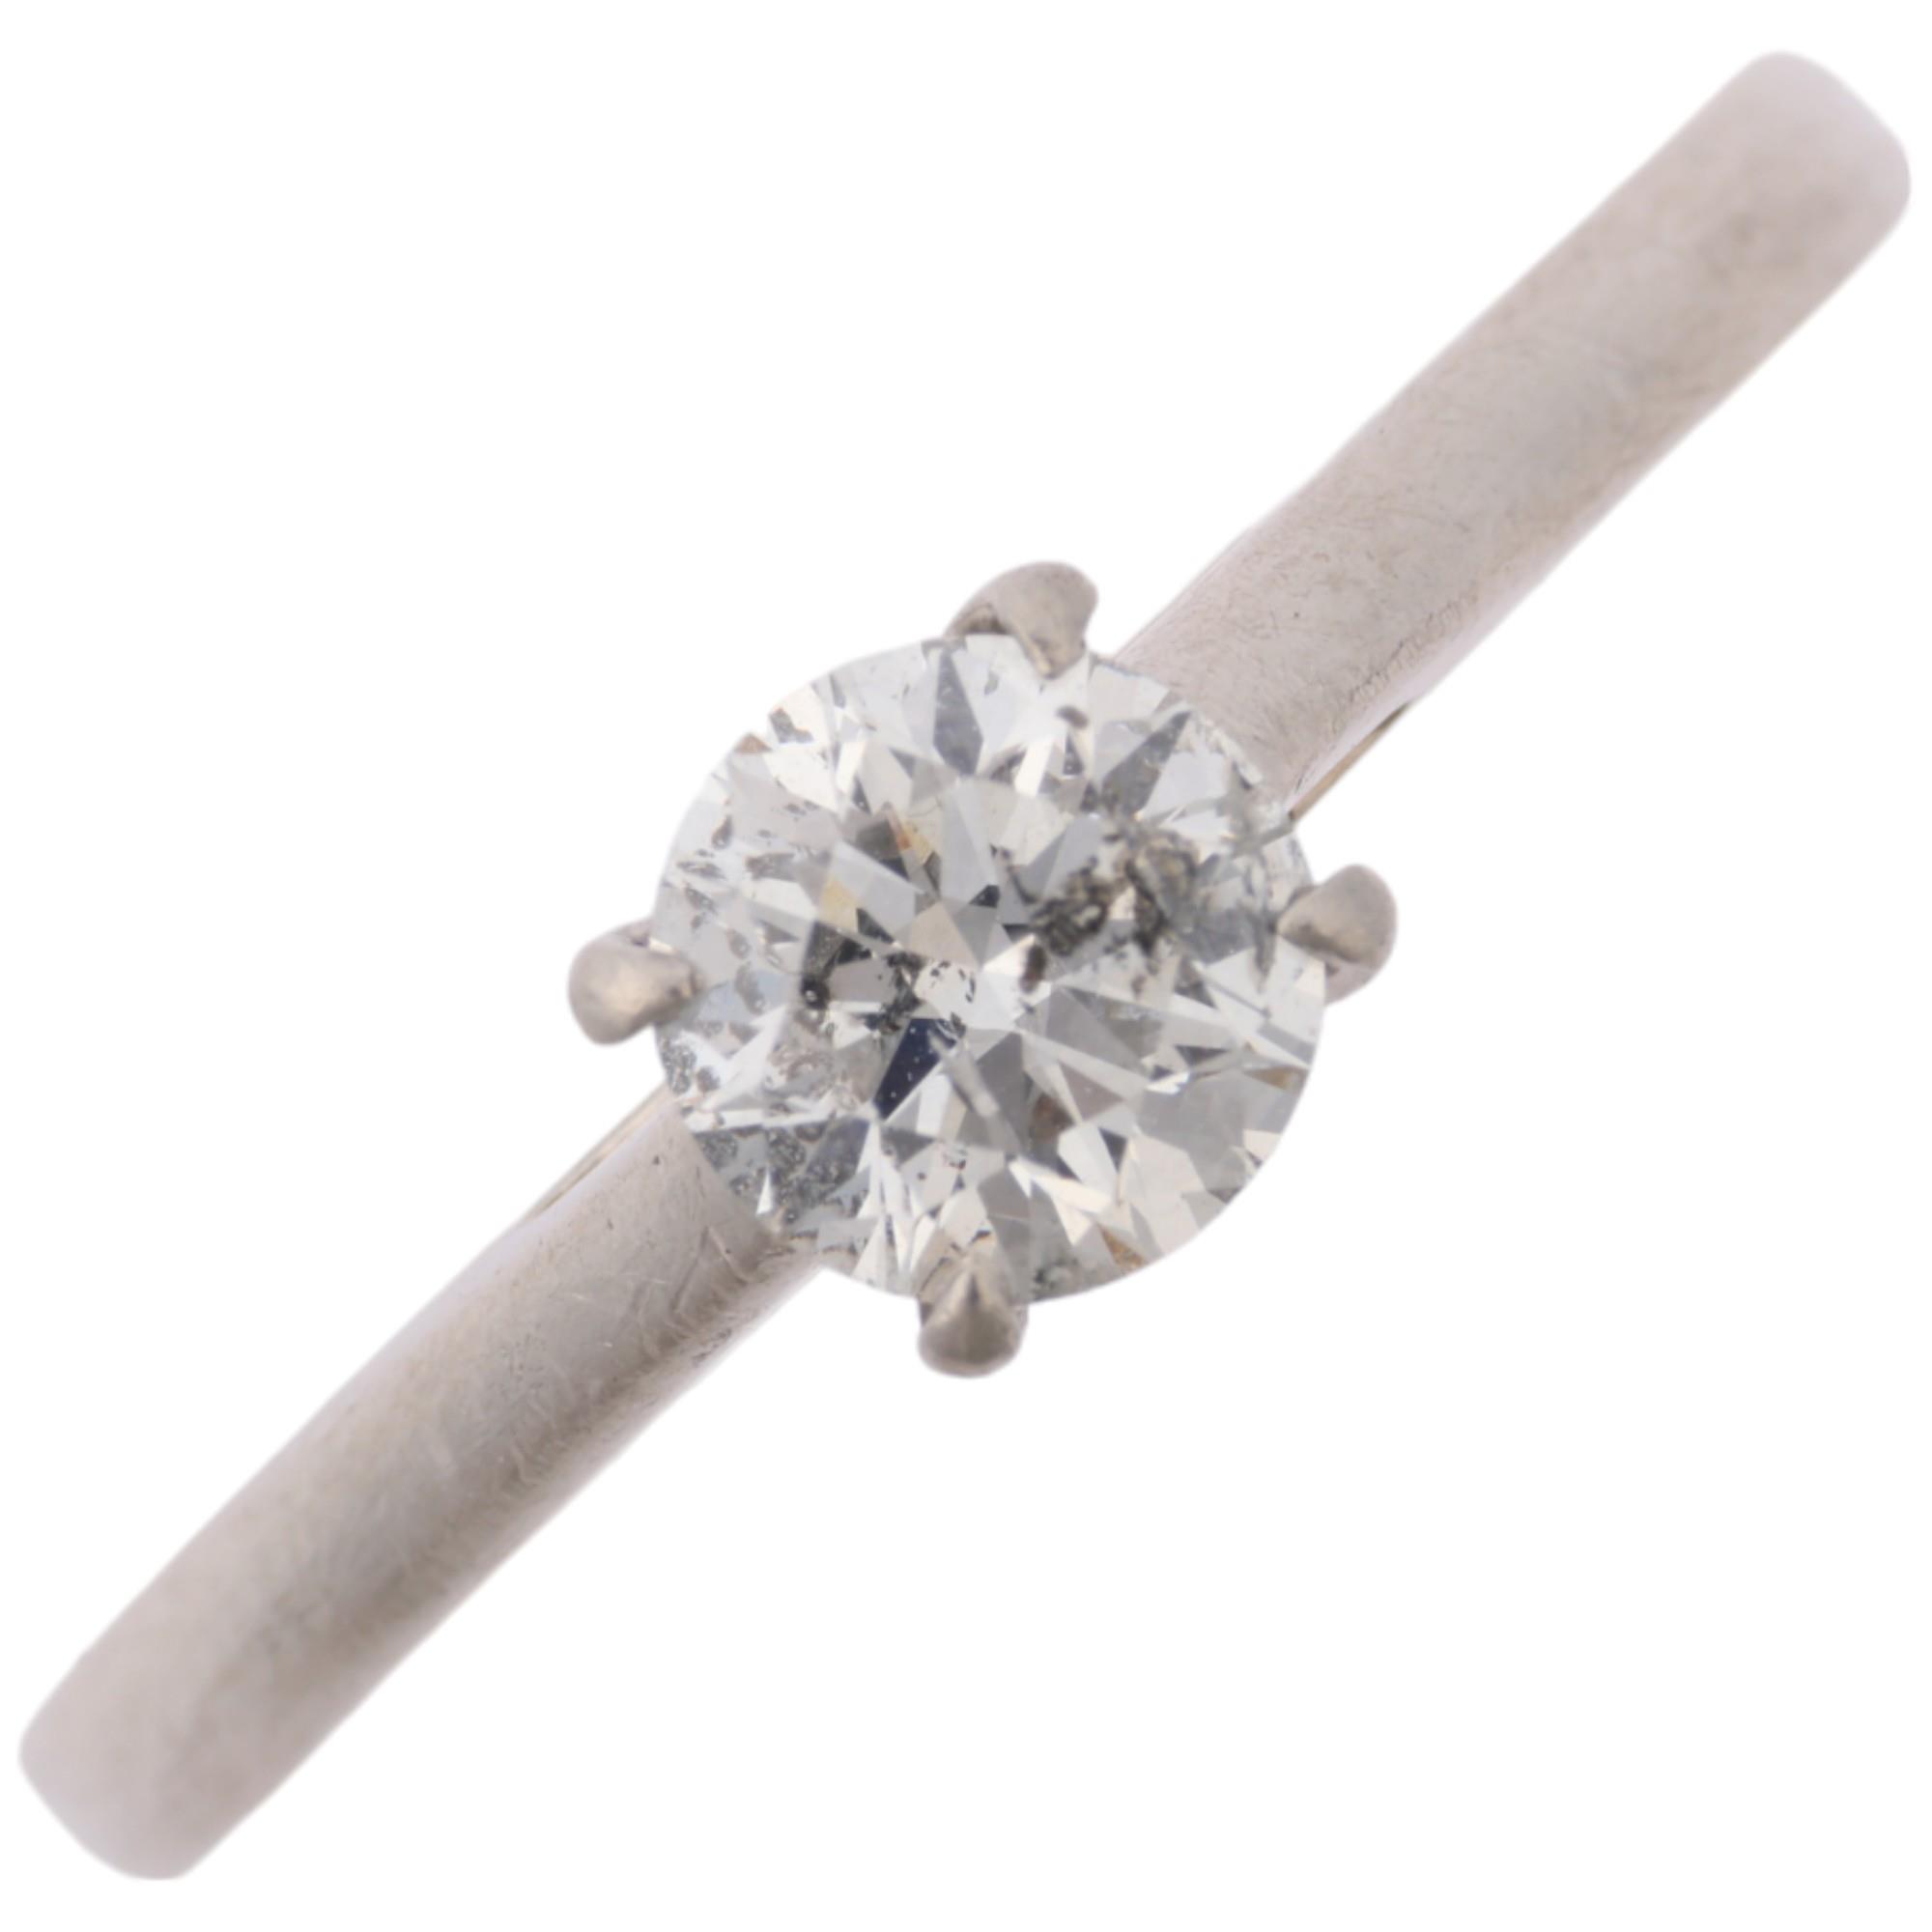 A modern platinum 0.5ct solitaire diamond ring, claw set with modern round brilliant-cut diamond,